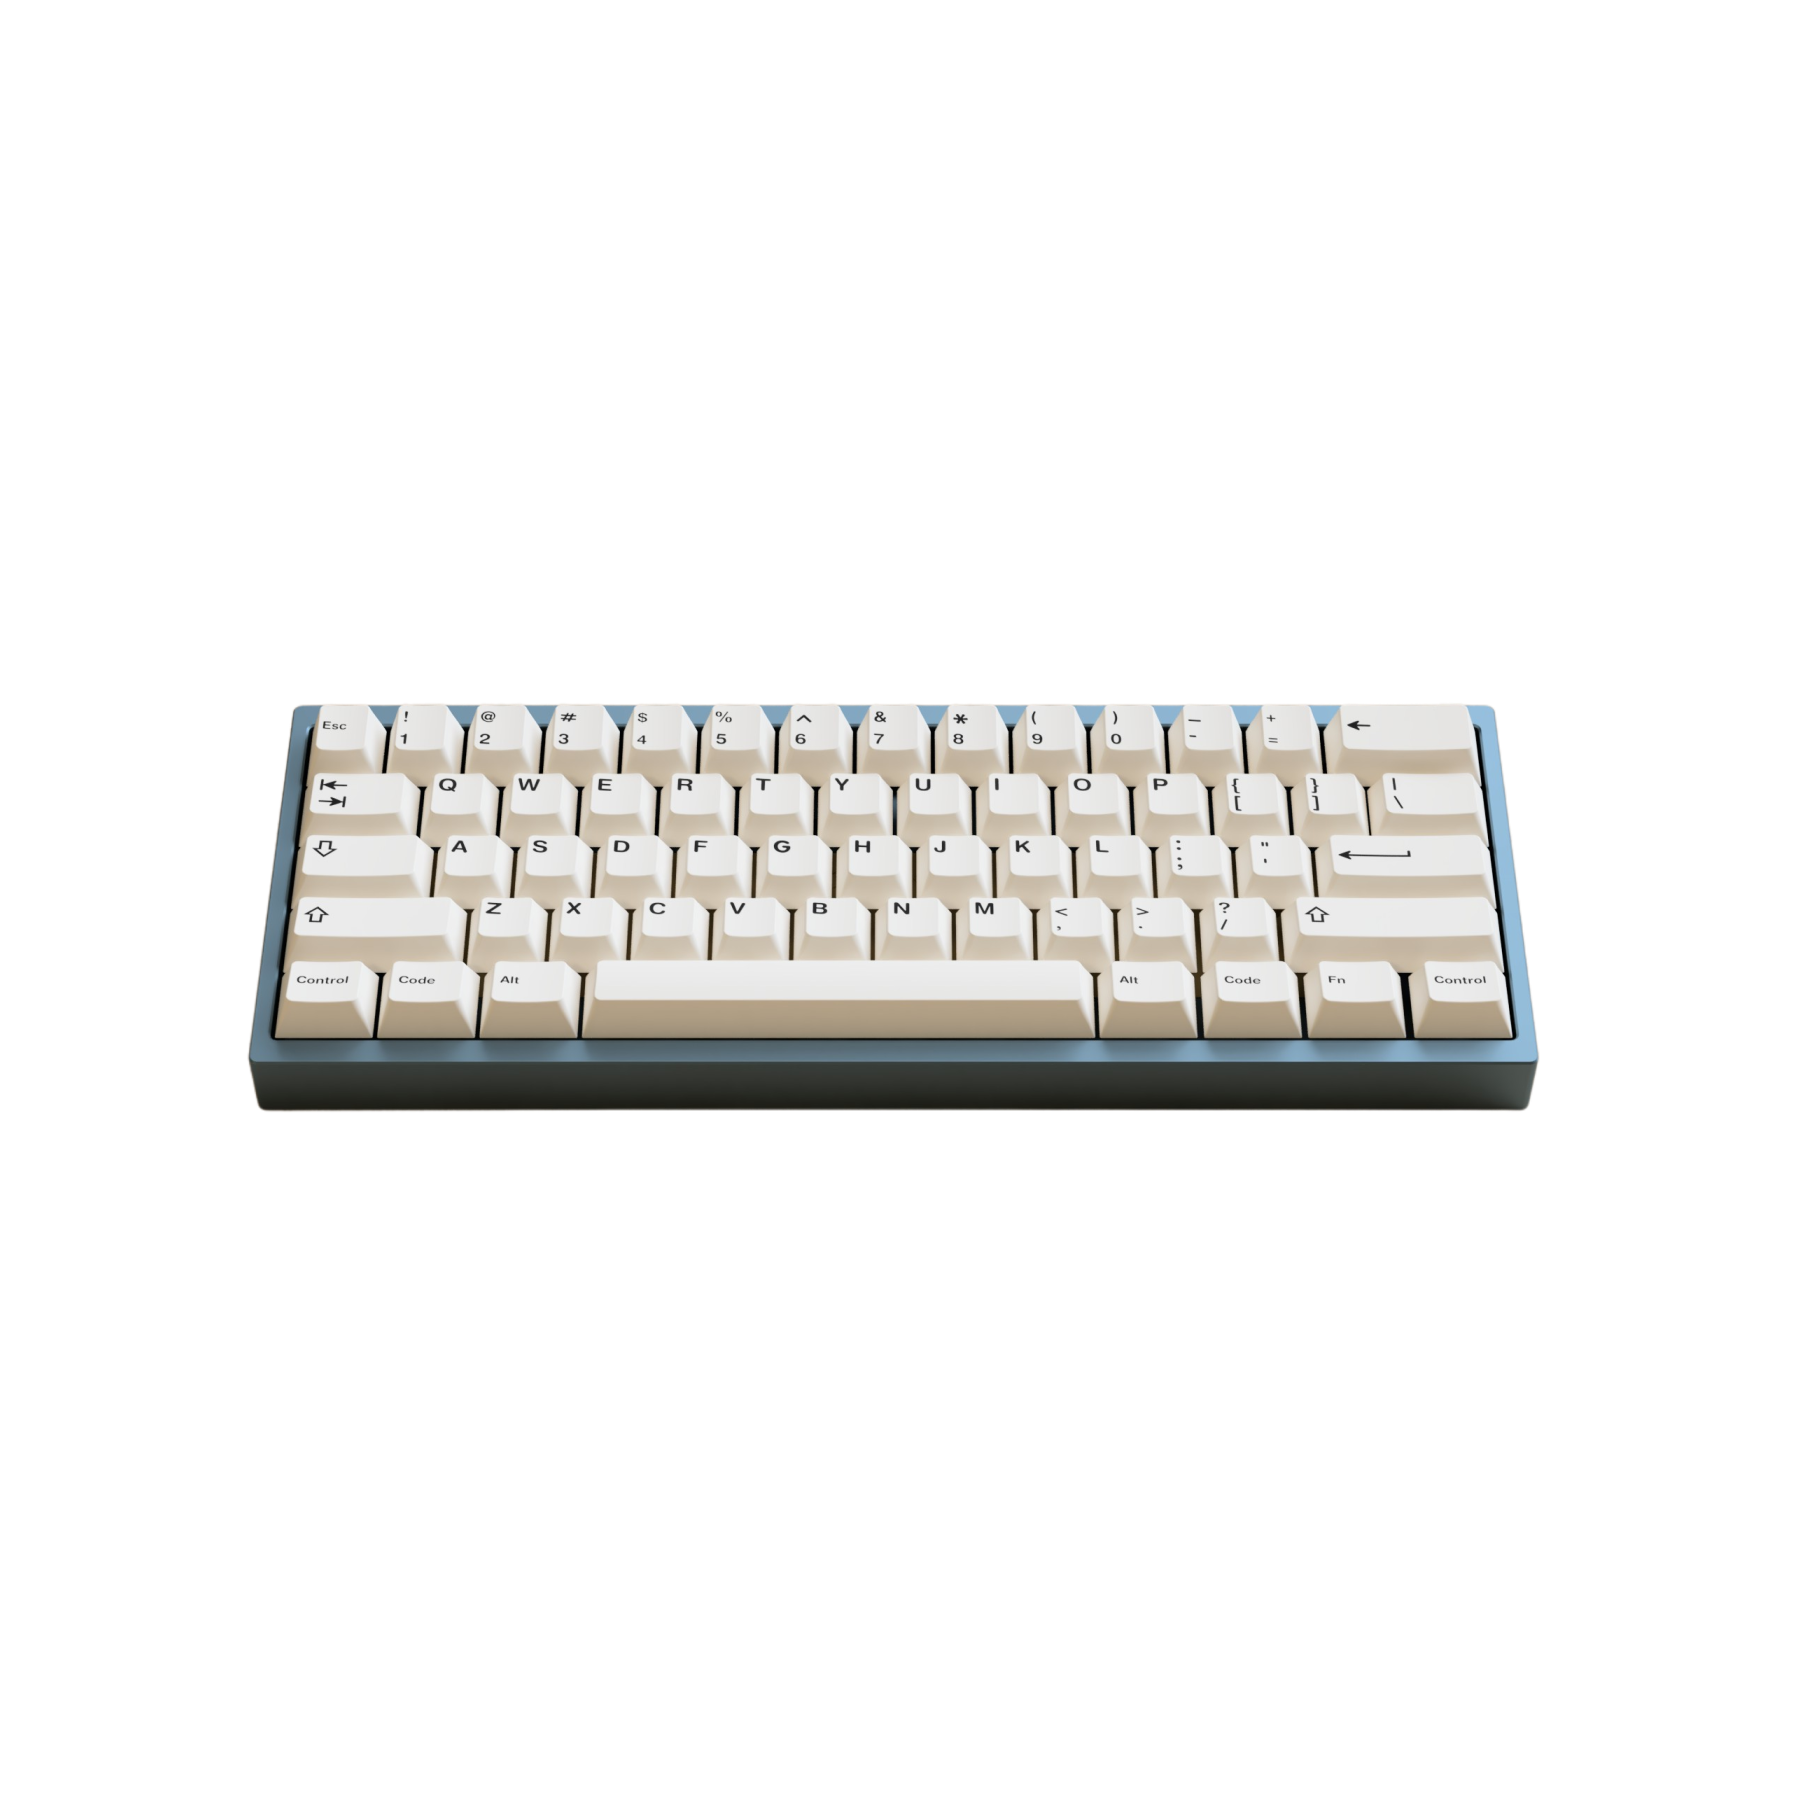 Ciel 60% Keyboard Kit